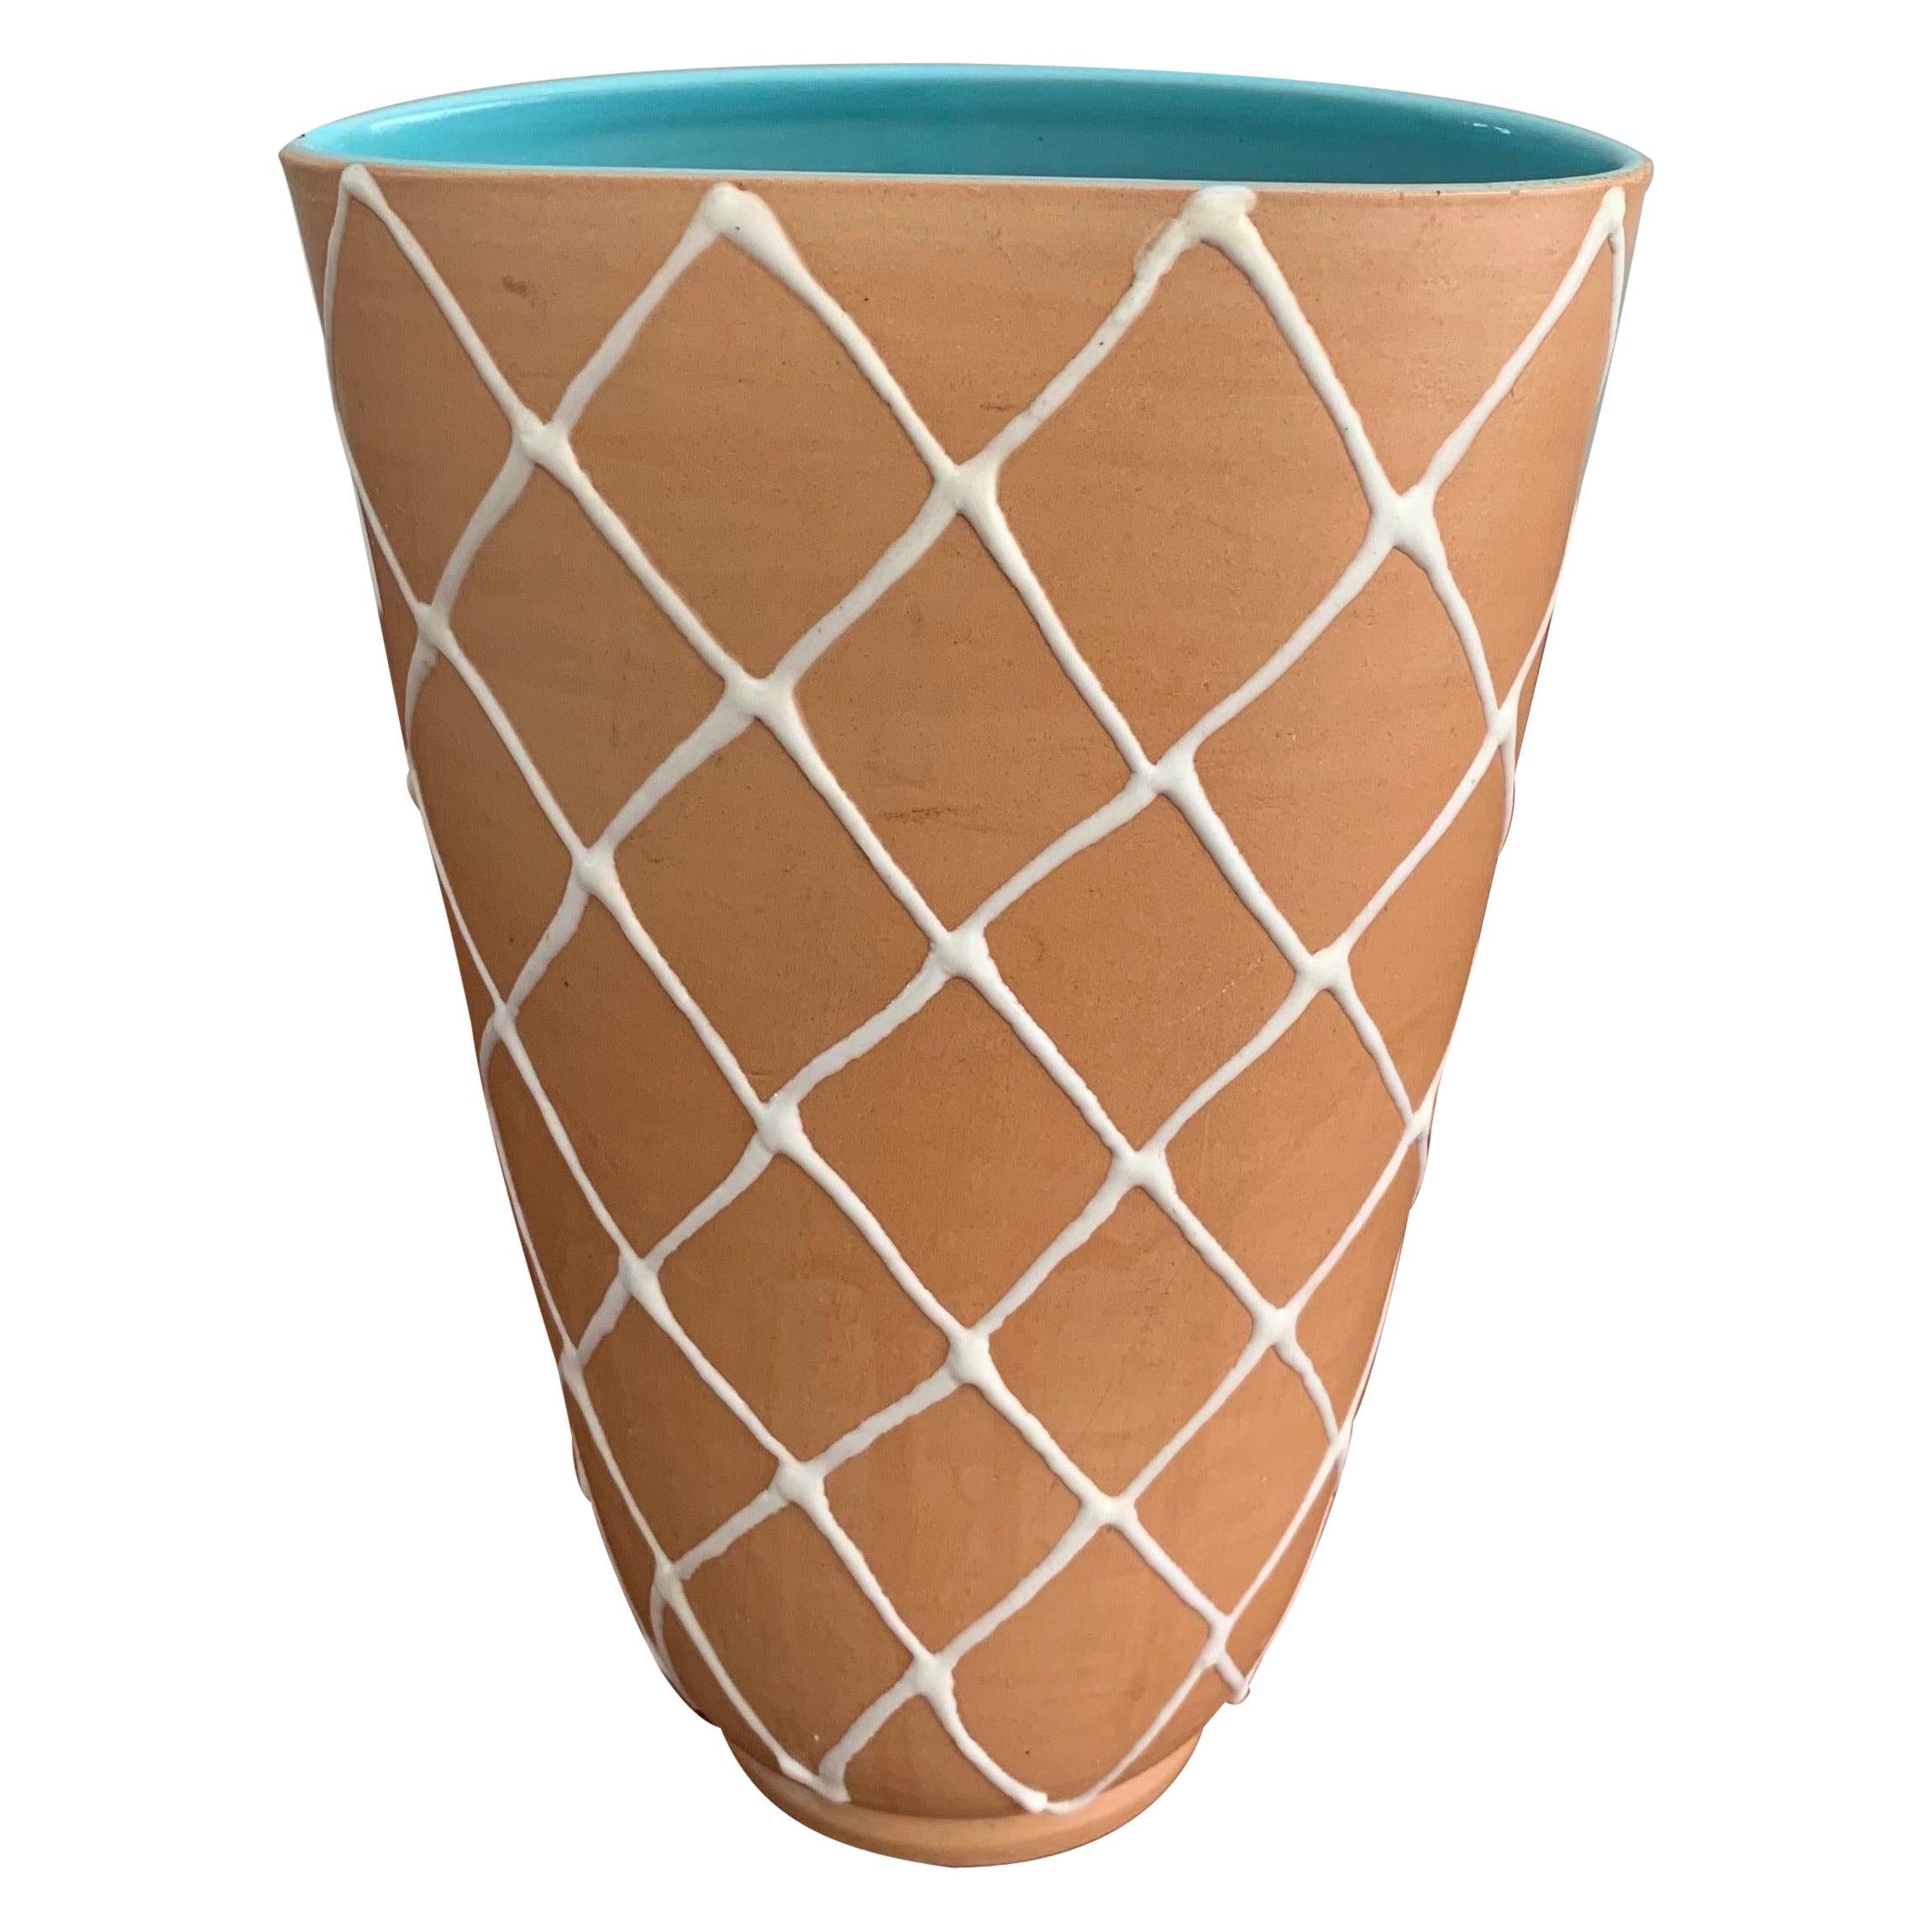 Italian Mid-Century Modern Ceramic Vase by Alvino Bagni For Sale